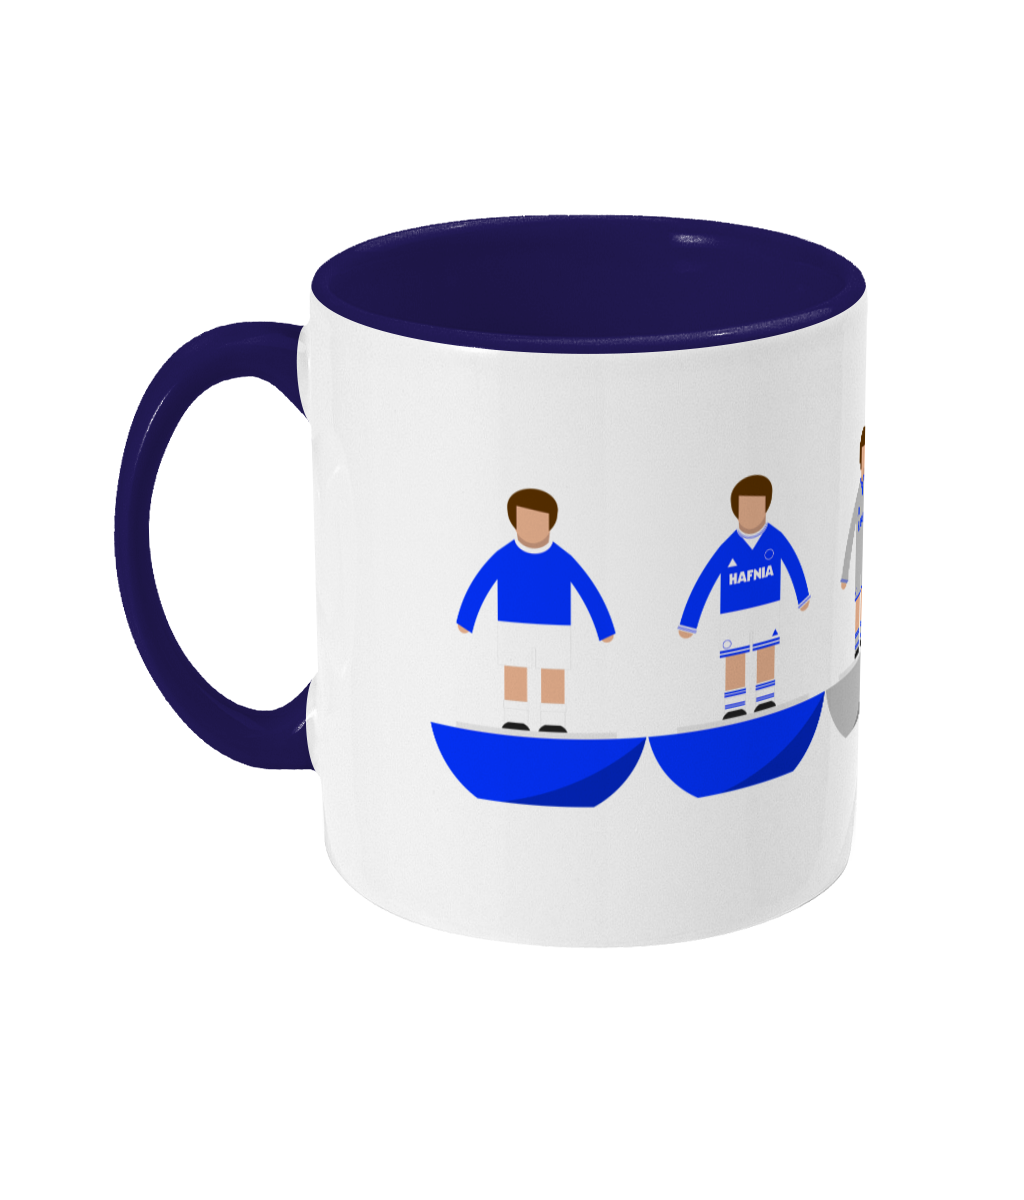 Football Kits 'Everton combined' Mug